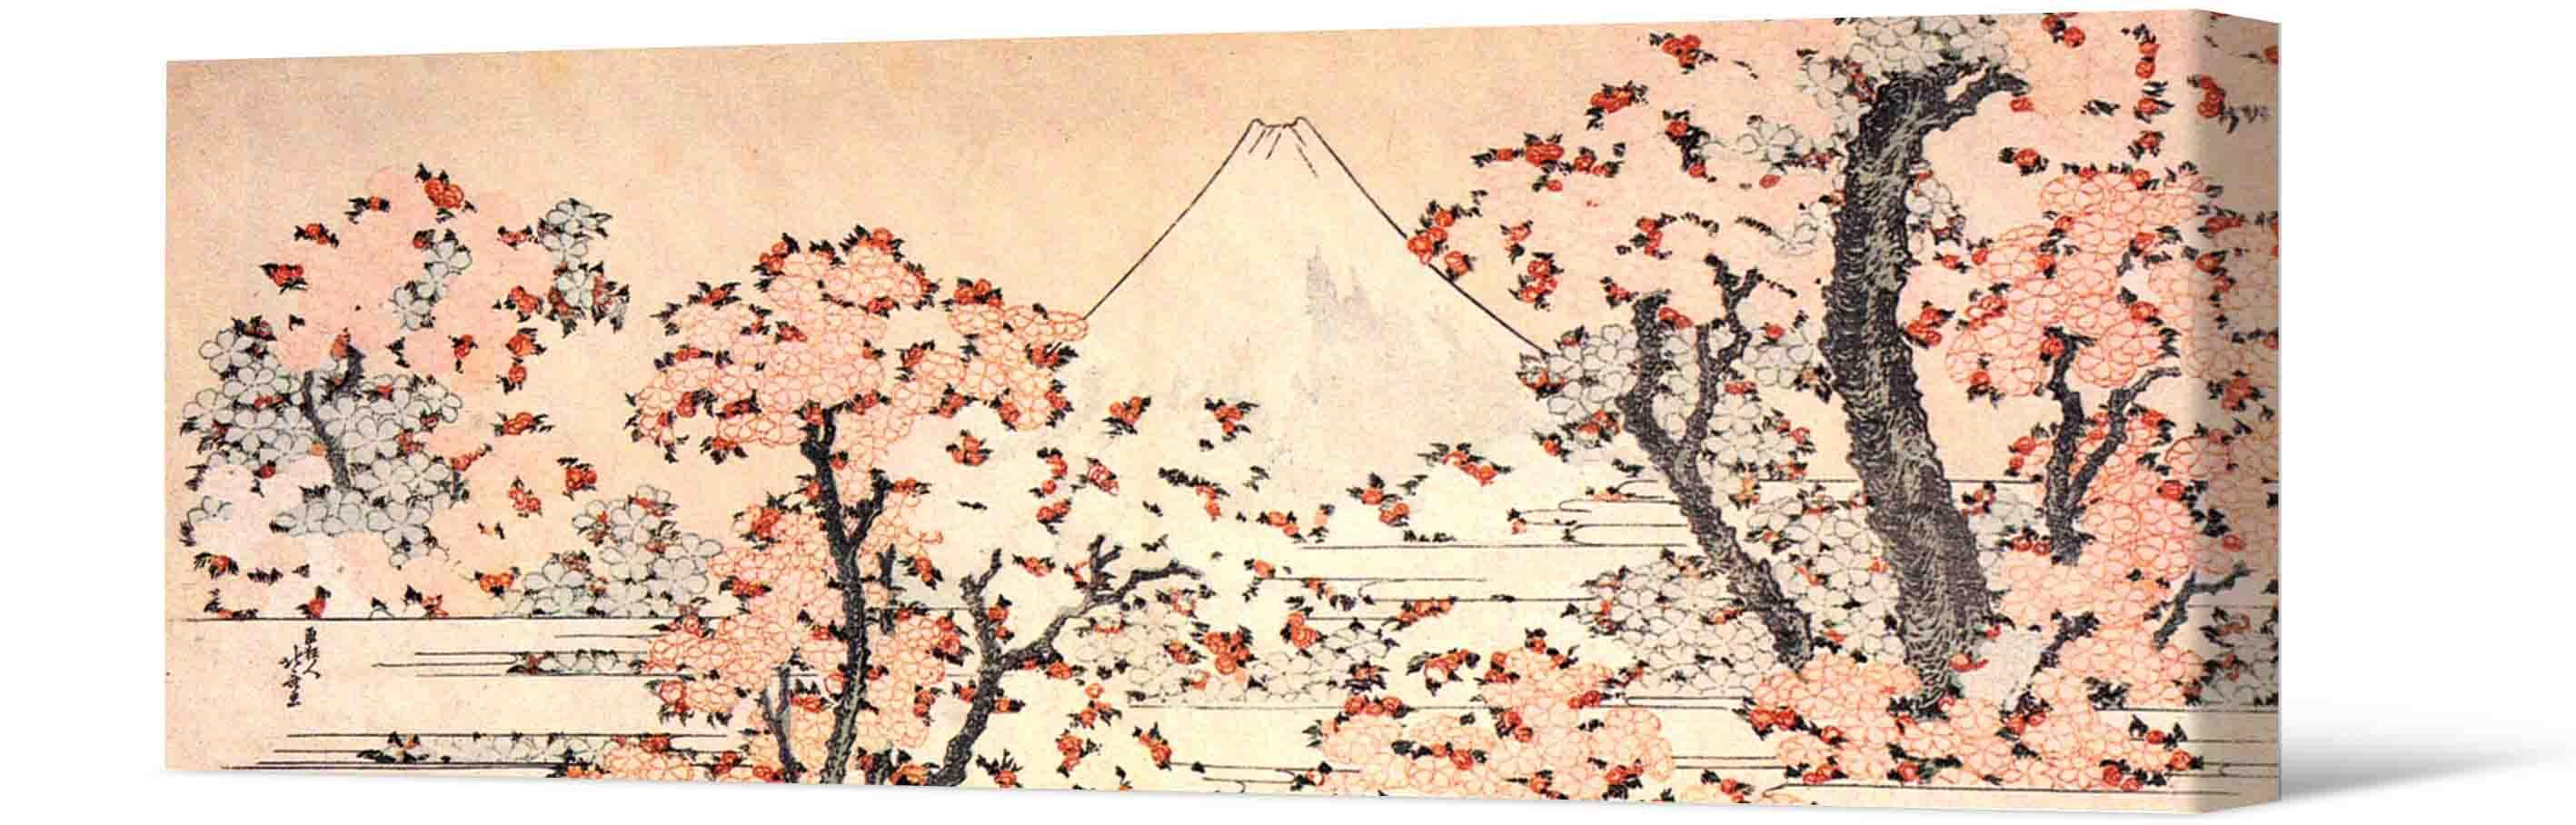 Obrazek Zdjęcie - drzewa sakura i wulkan